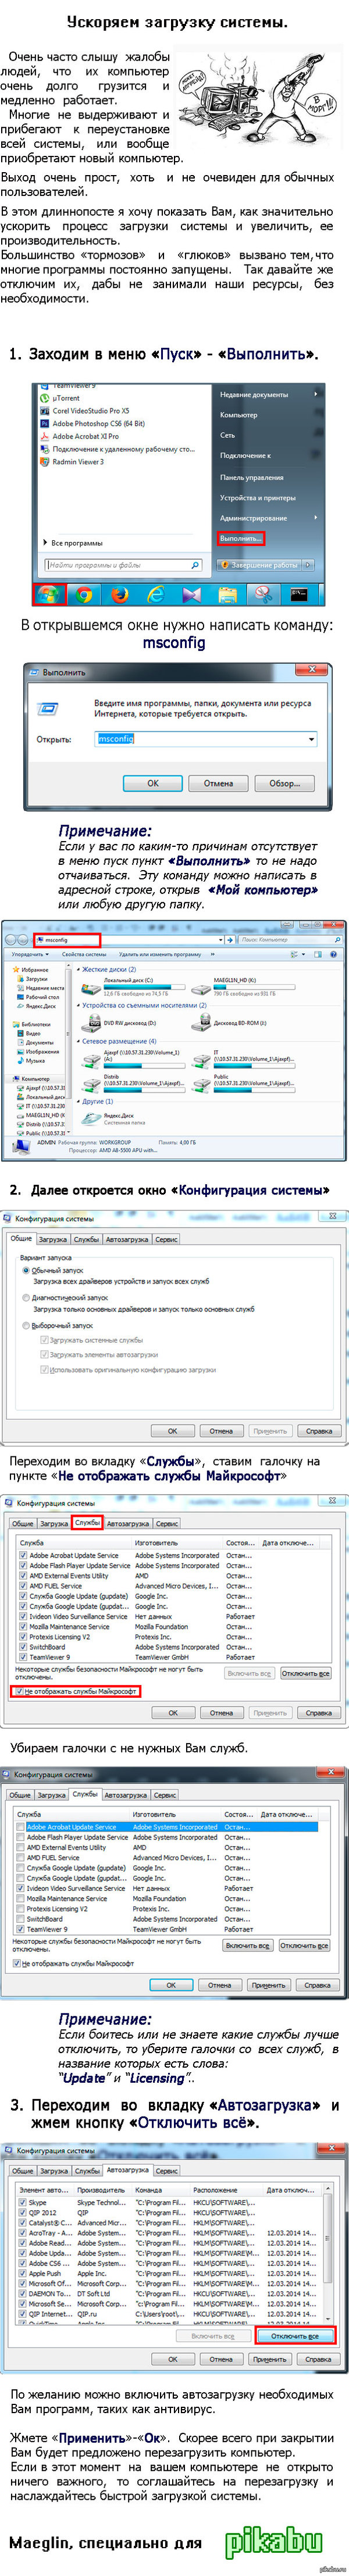     Windows  jpeg 602px. x 4444px.